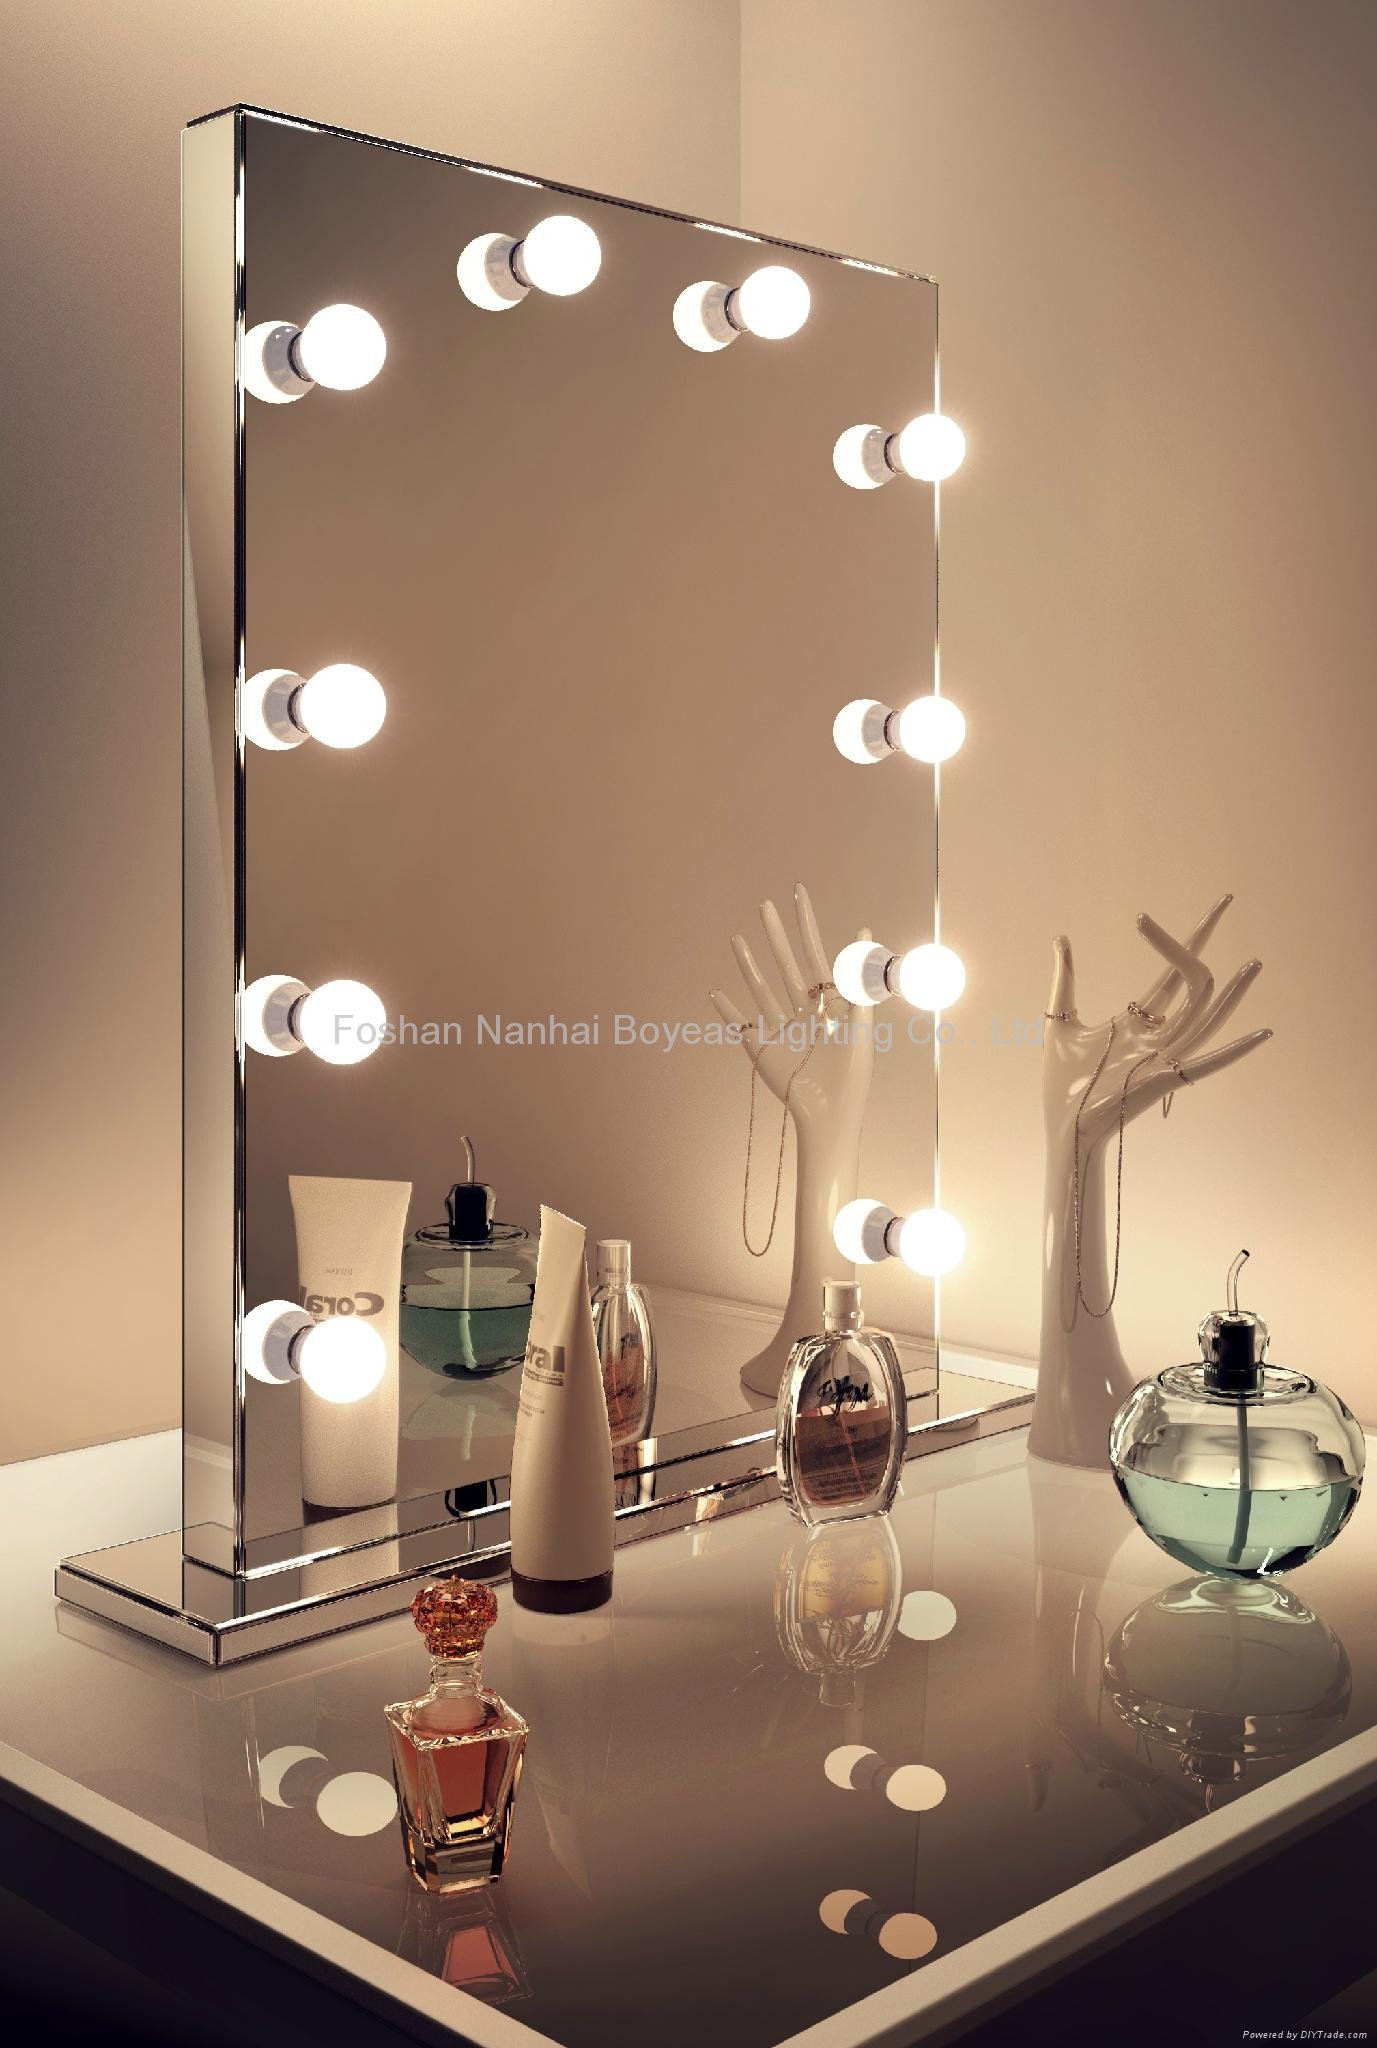 Cosmetic Mirror